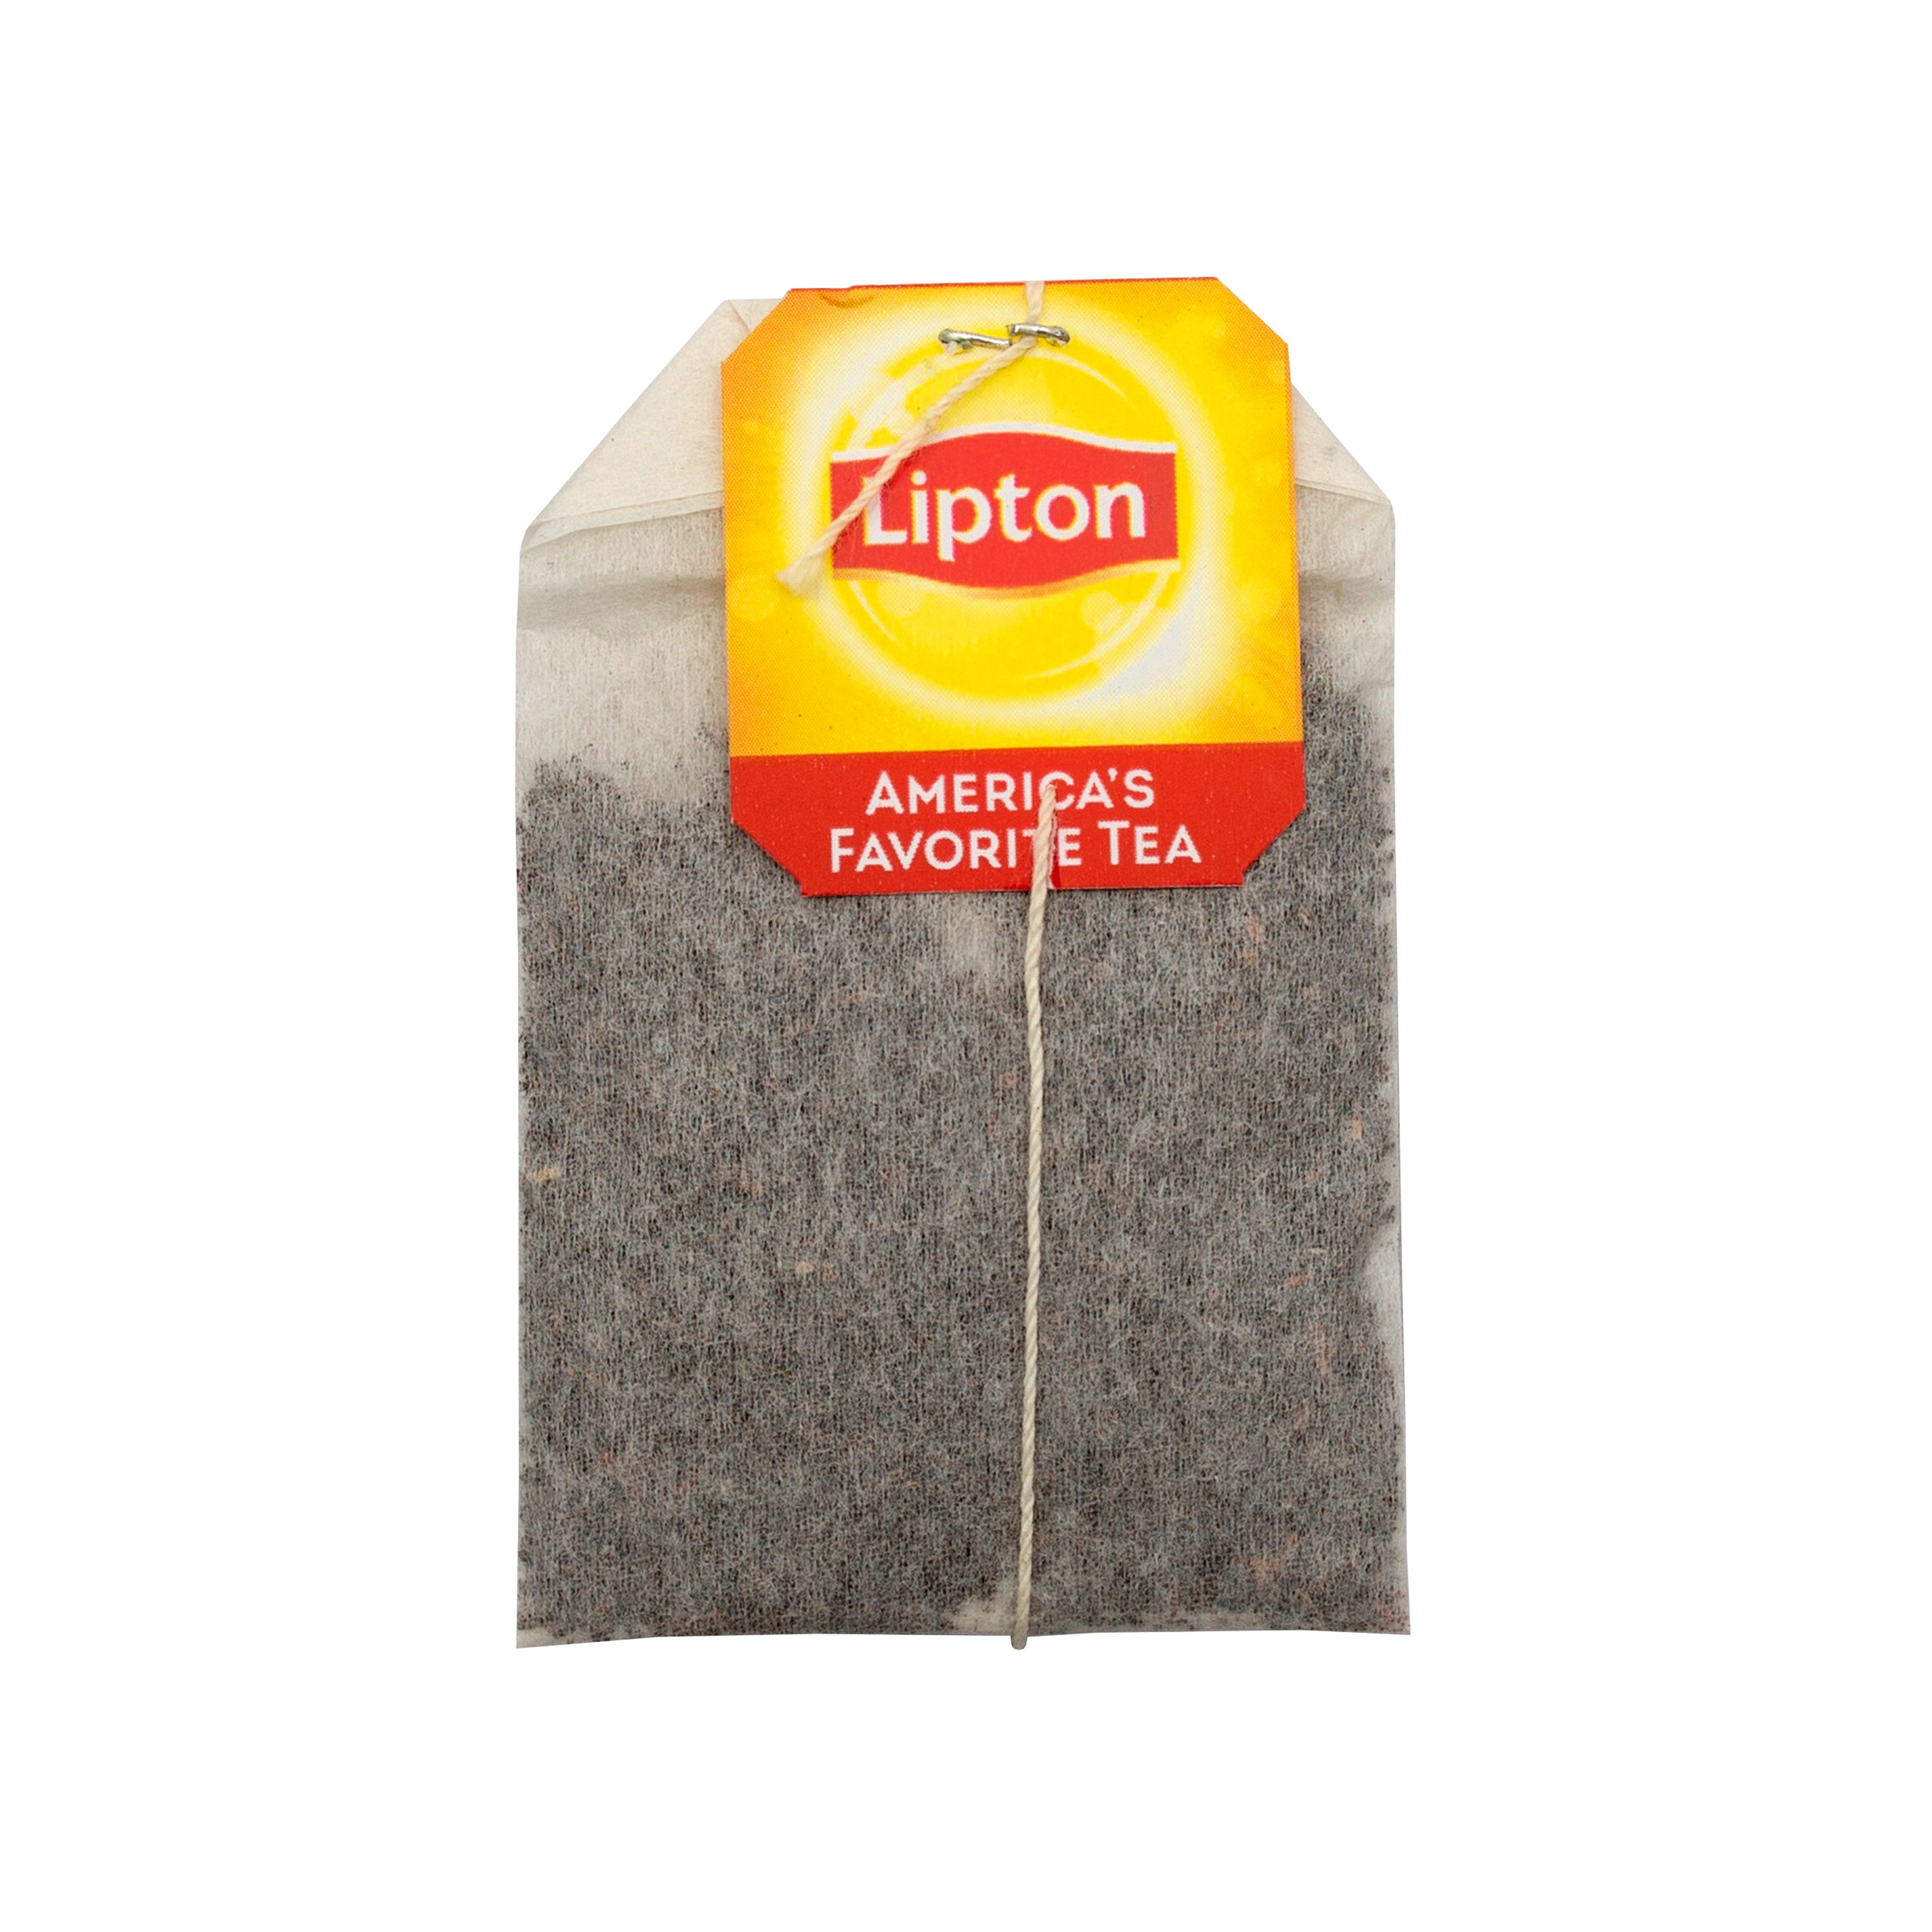 Lipton Tea Black Tea Bags - 100 ct box | Food Lion